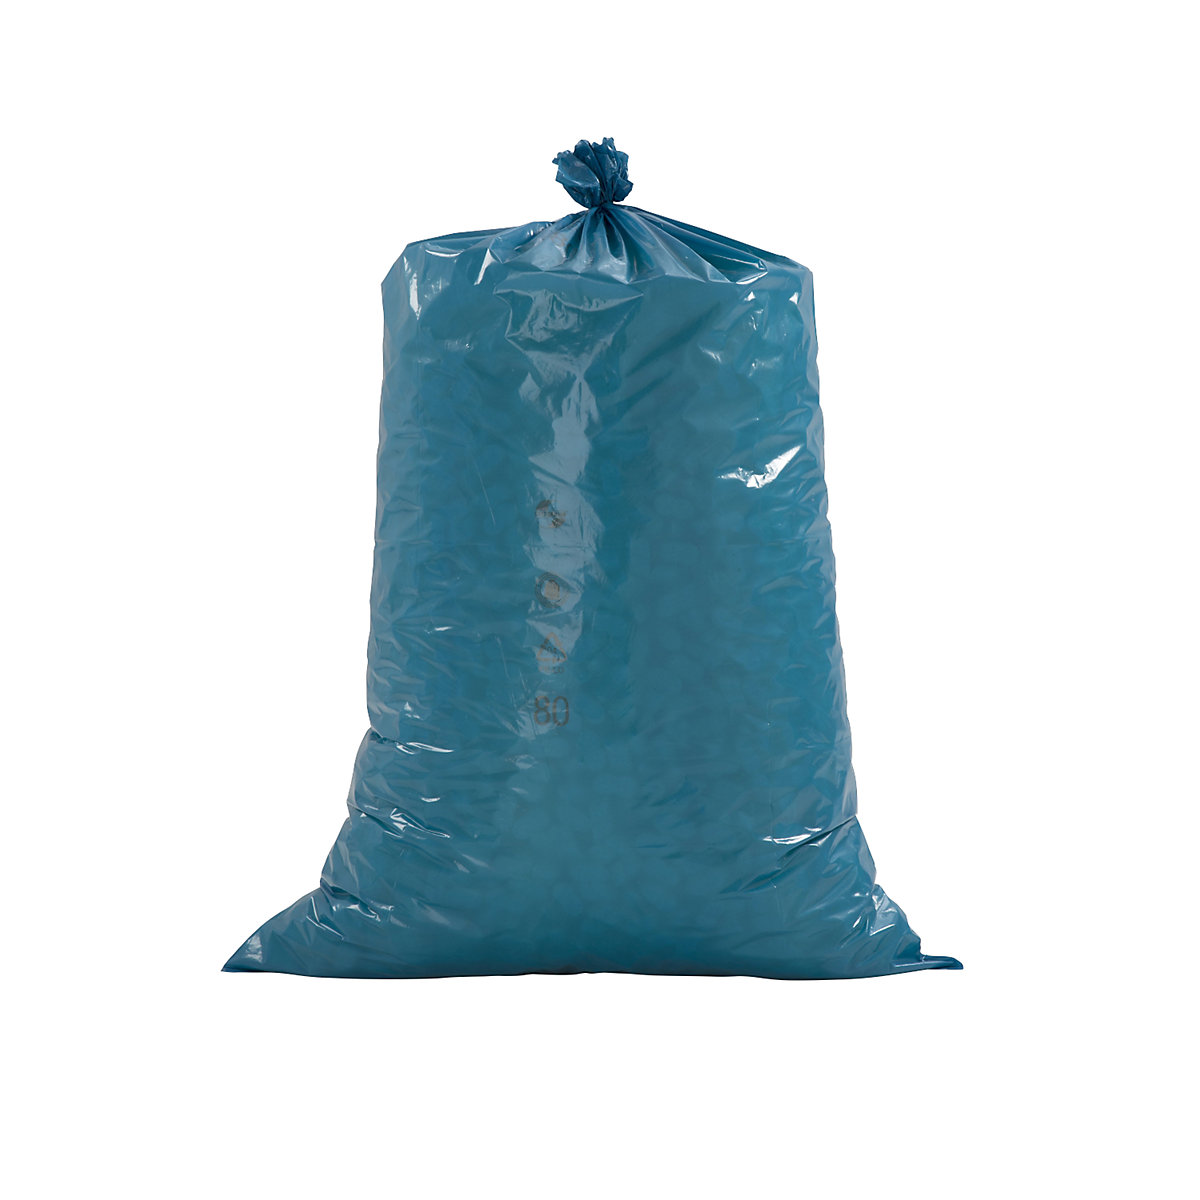 PREMIUM PLUS waste sacks - Deiss